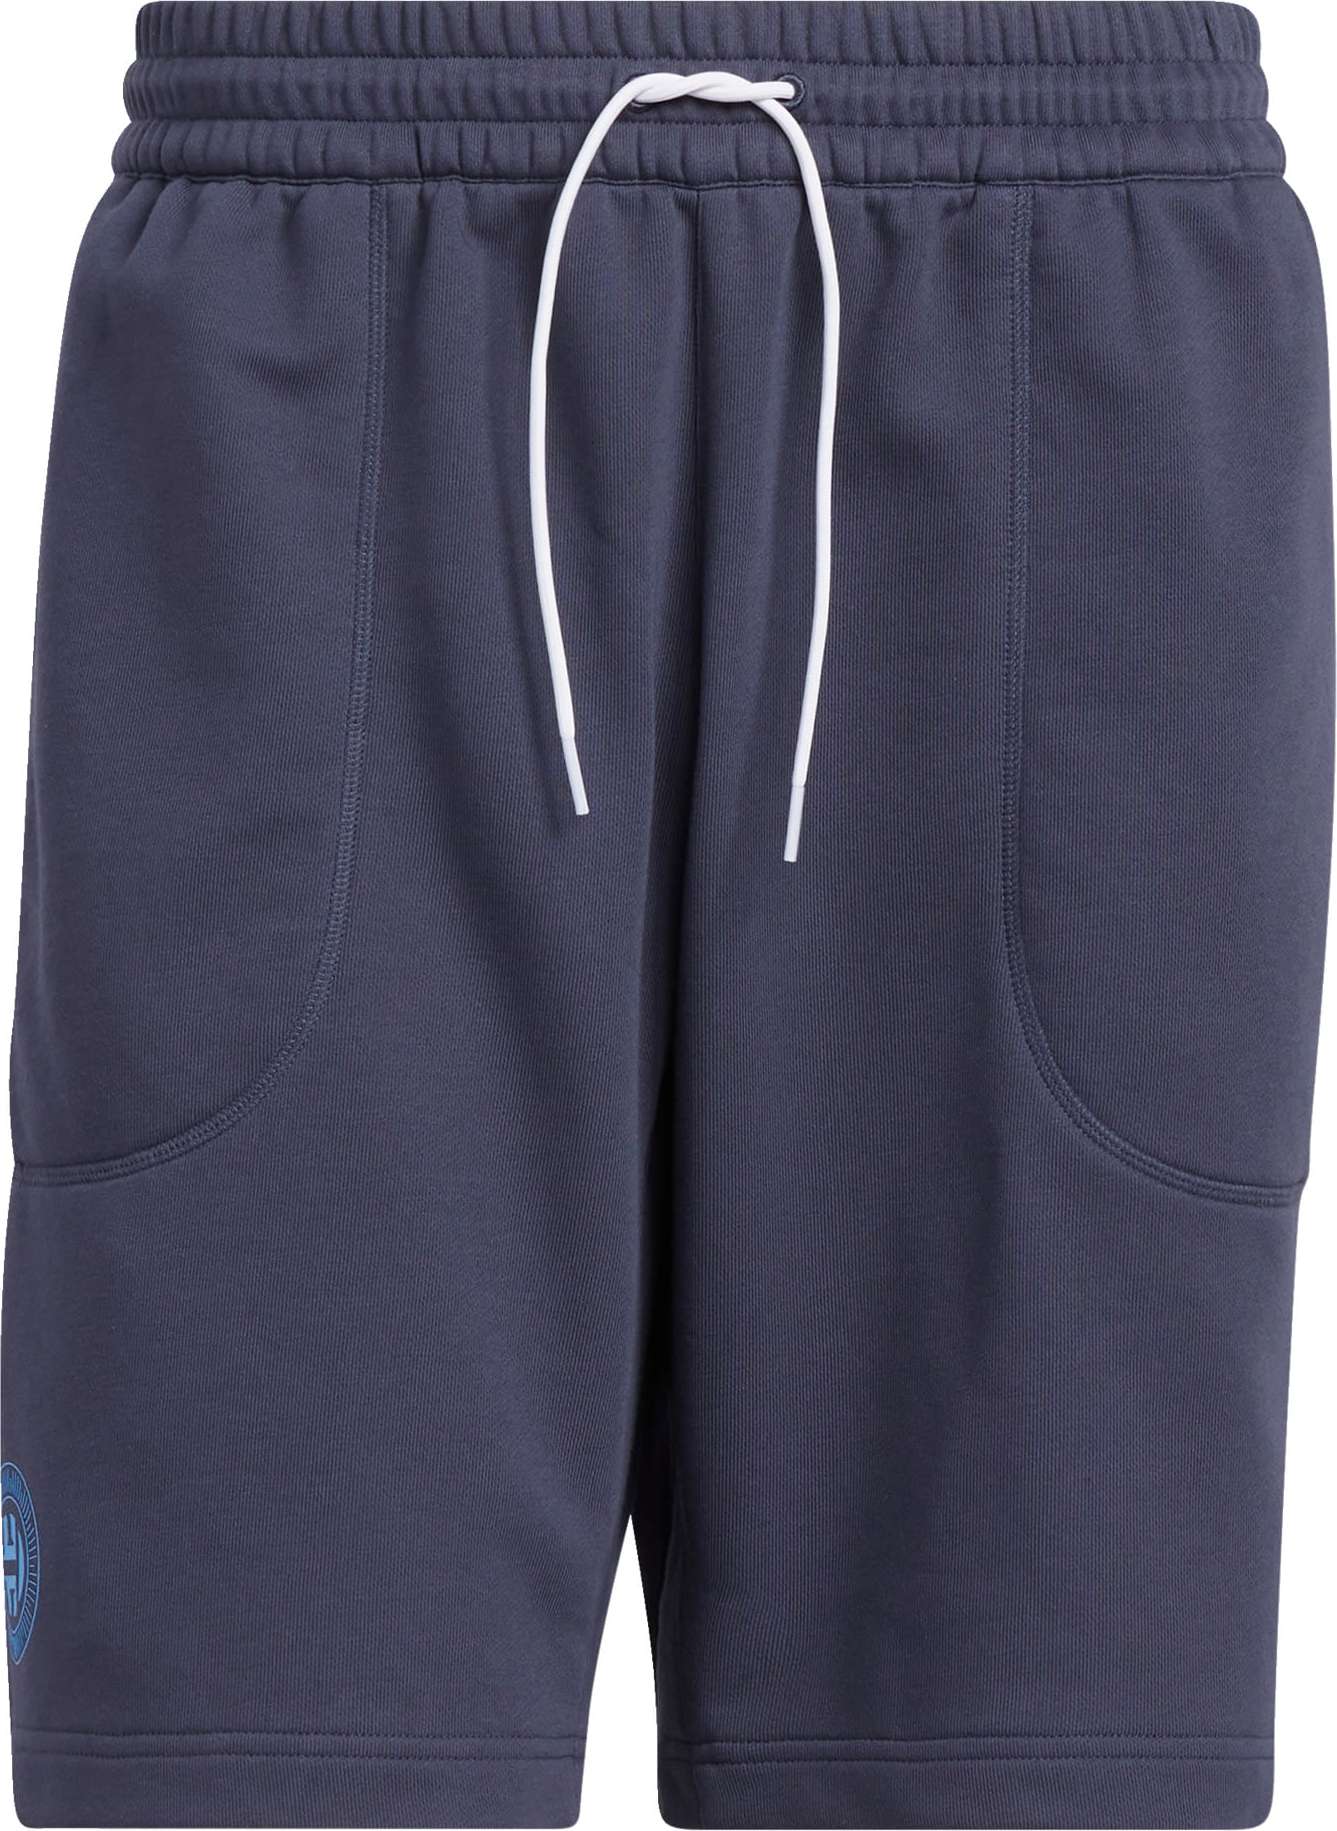 ADIDAS SPORTSWEAR Sportovní kalhoty 'Harden' marine modrá